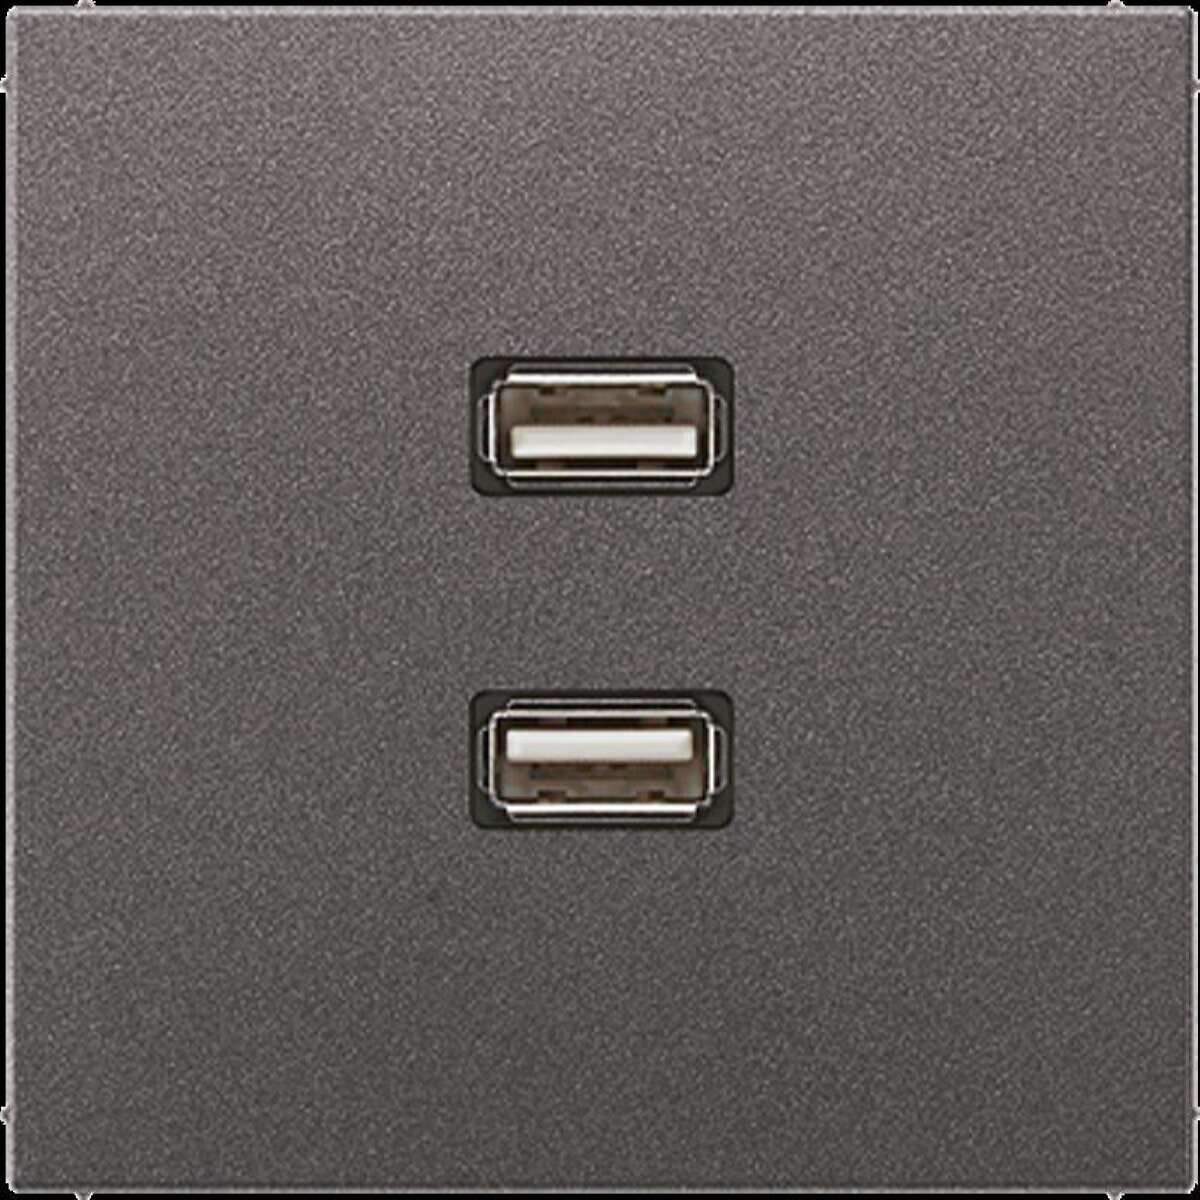 Jung Multimedia-Anschlusssystem 2 x USB 2.0, Serie LS, anthrazit (lackiertes Aluminium) MAAL1153AN